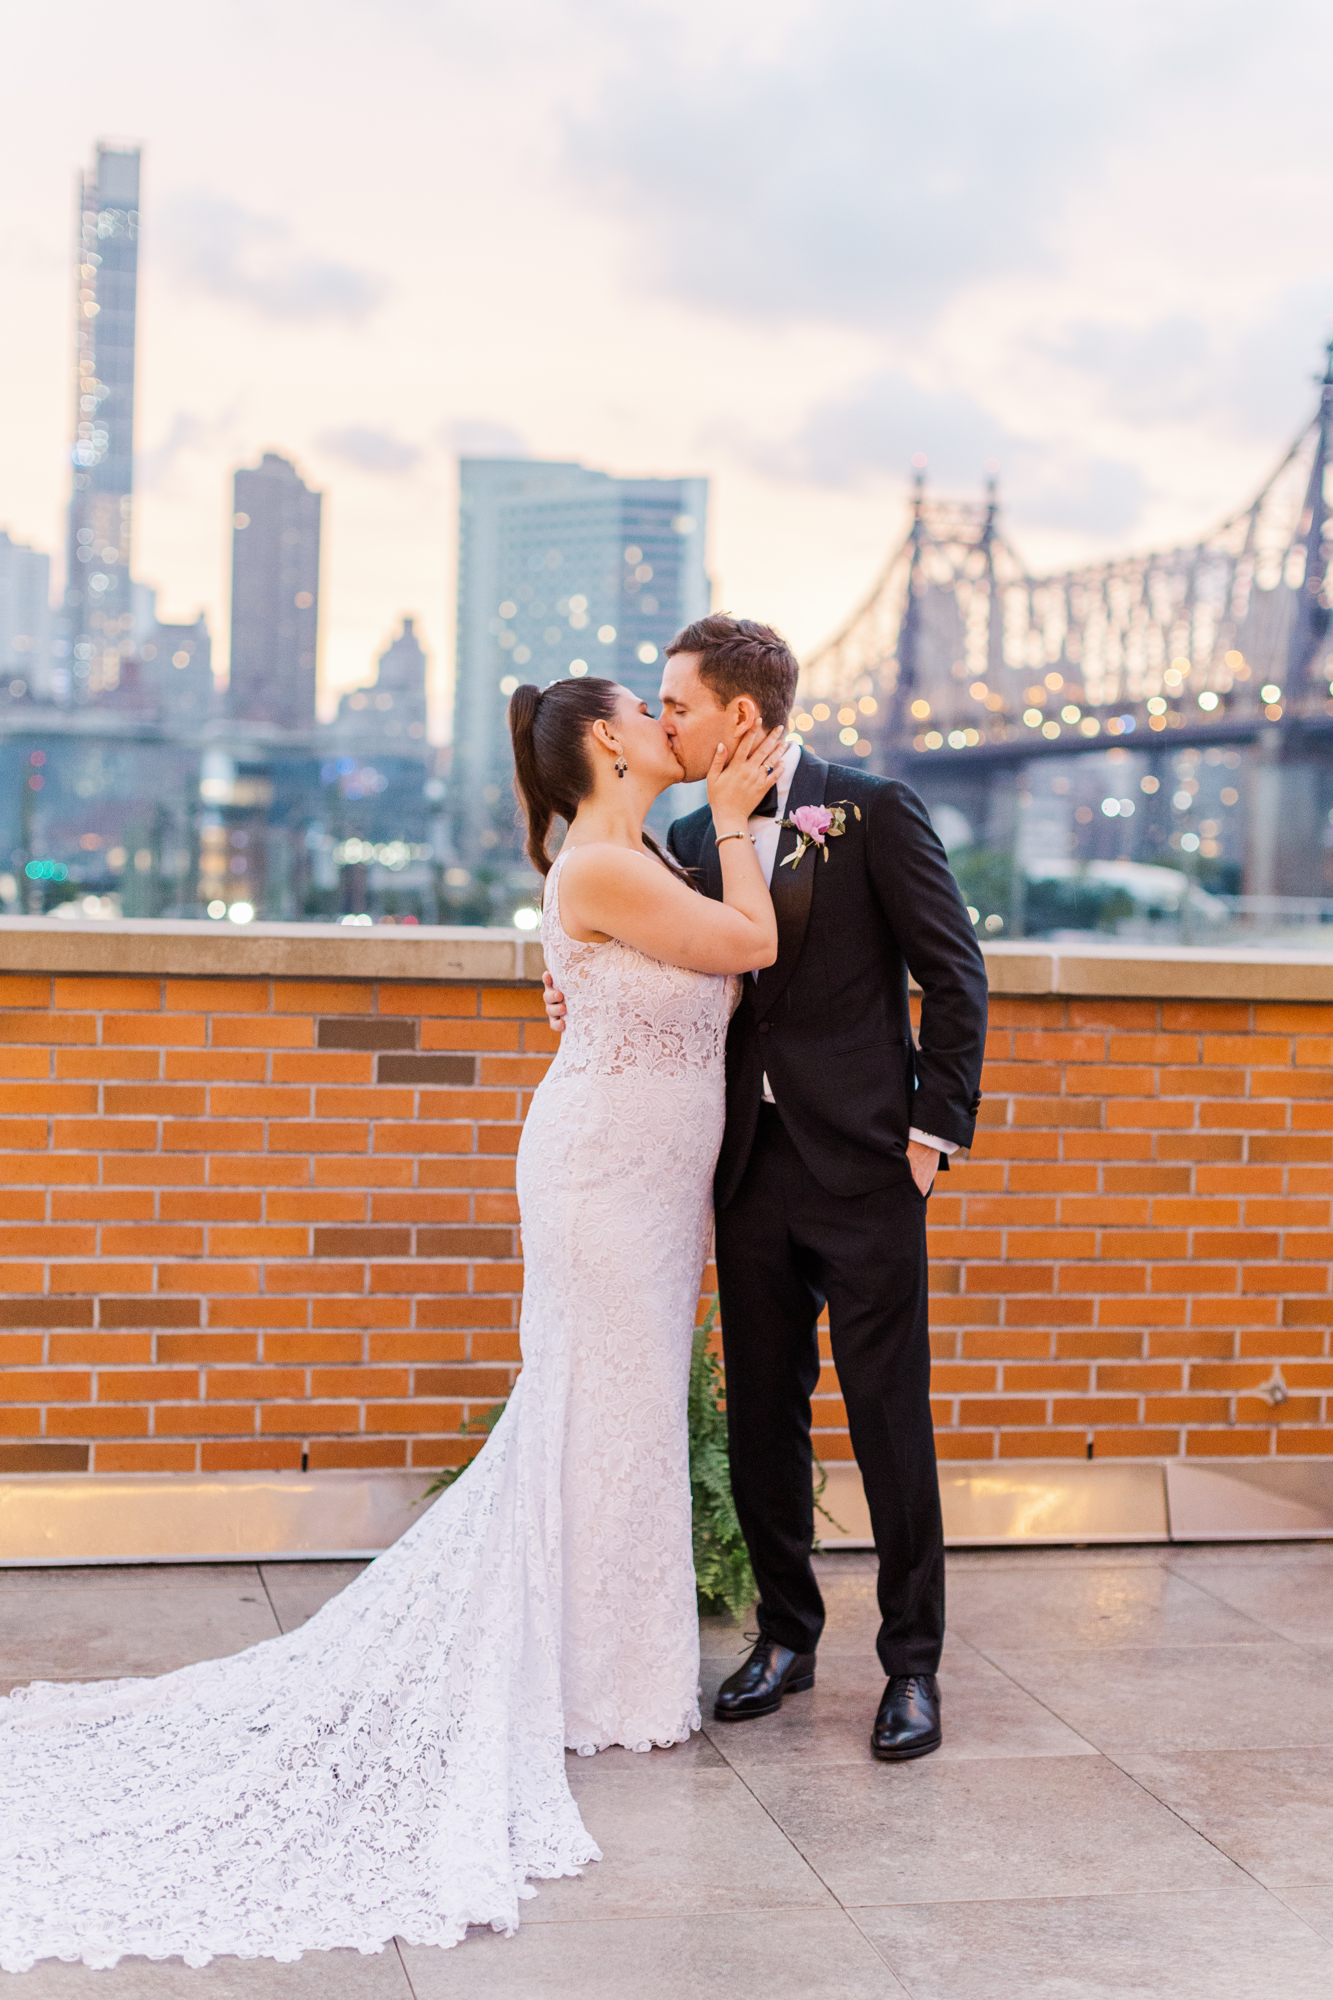 Intimate Bordone Wedding Photos in Long Island City with NYC Skyline